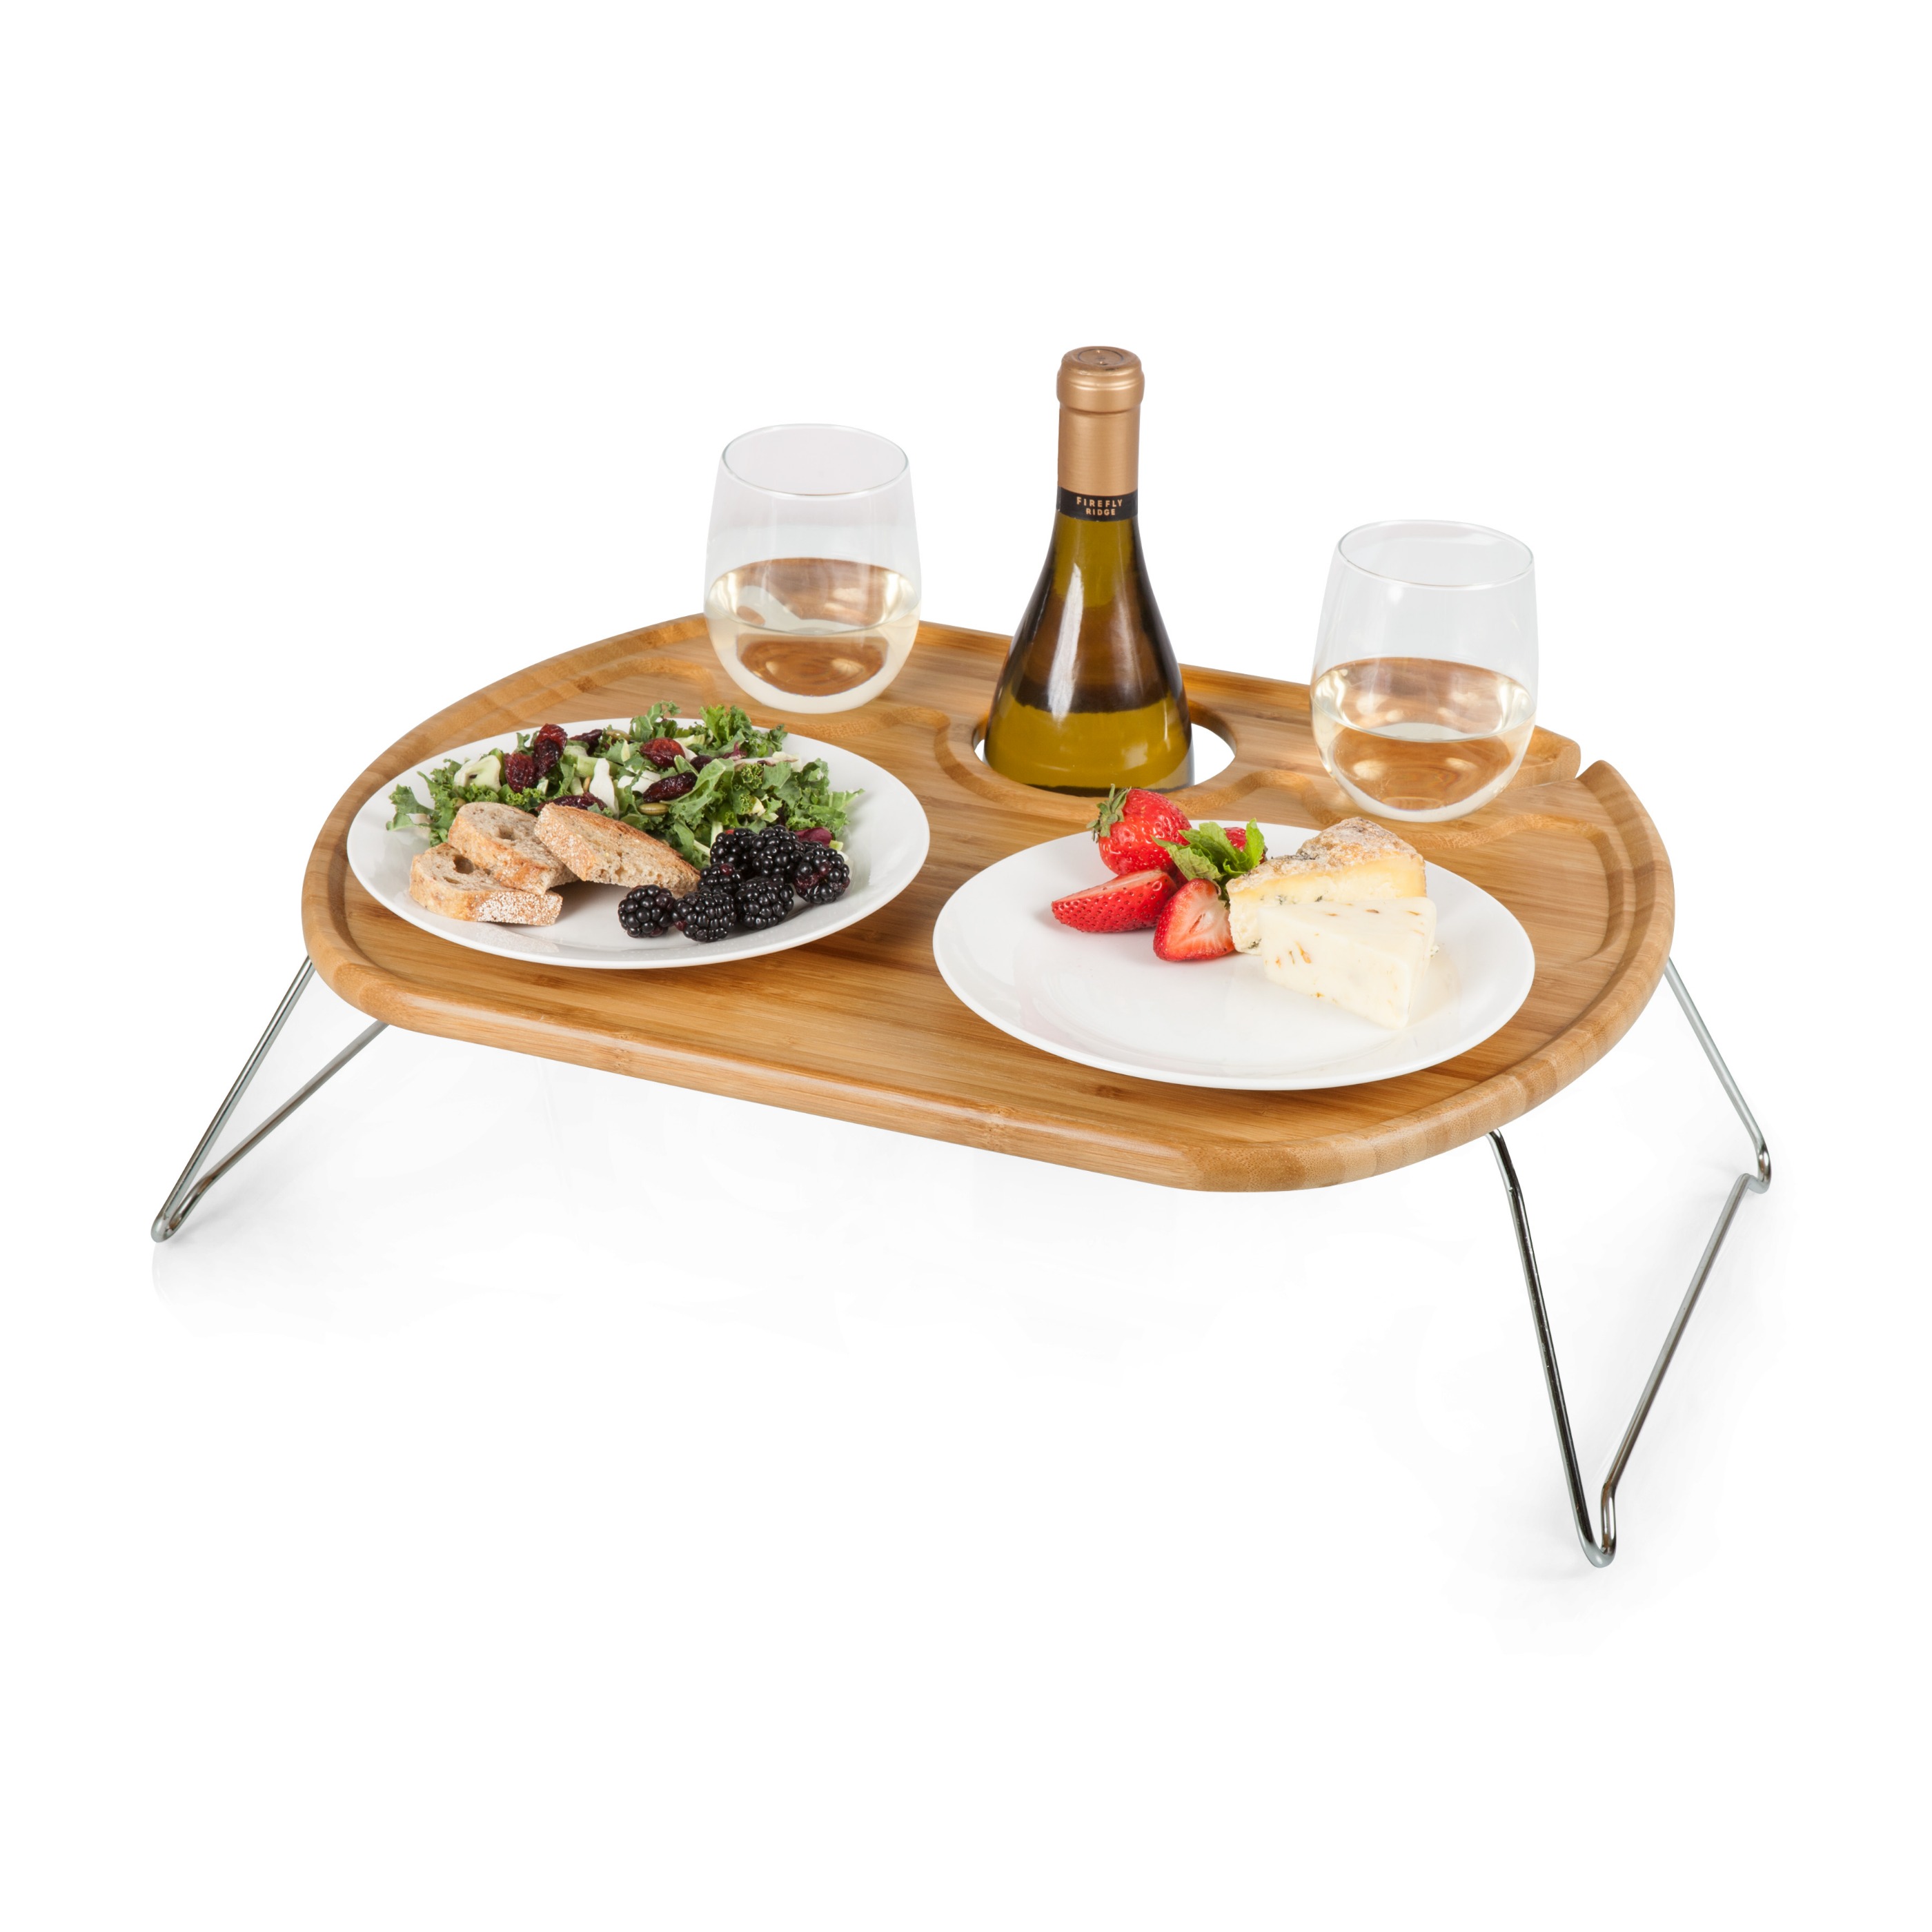 【美國Picnic Time】Mesamio 竹製折疊野餐桌